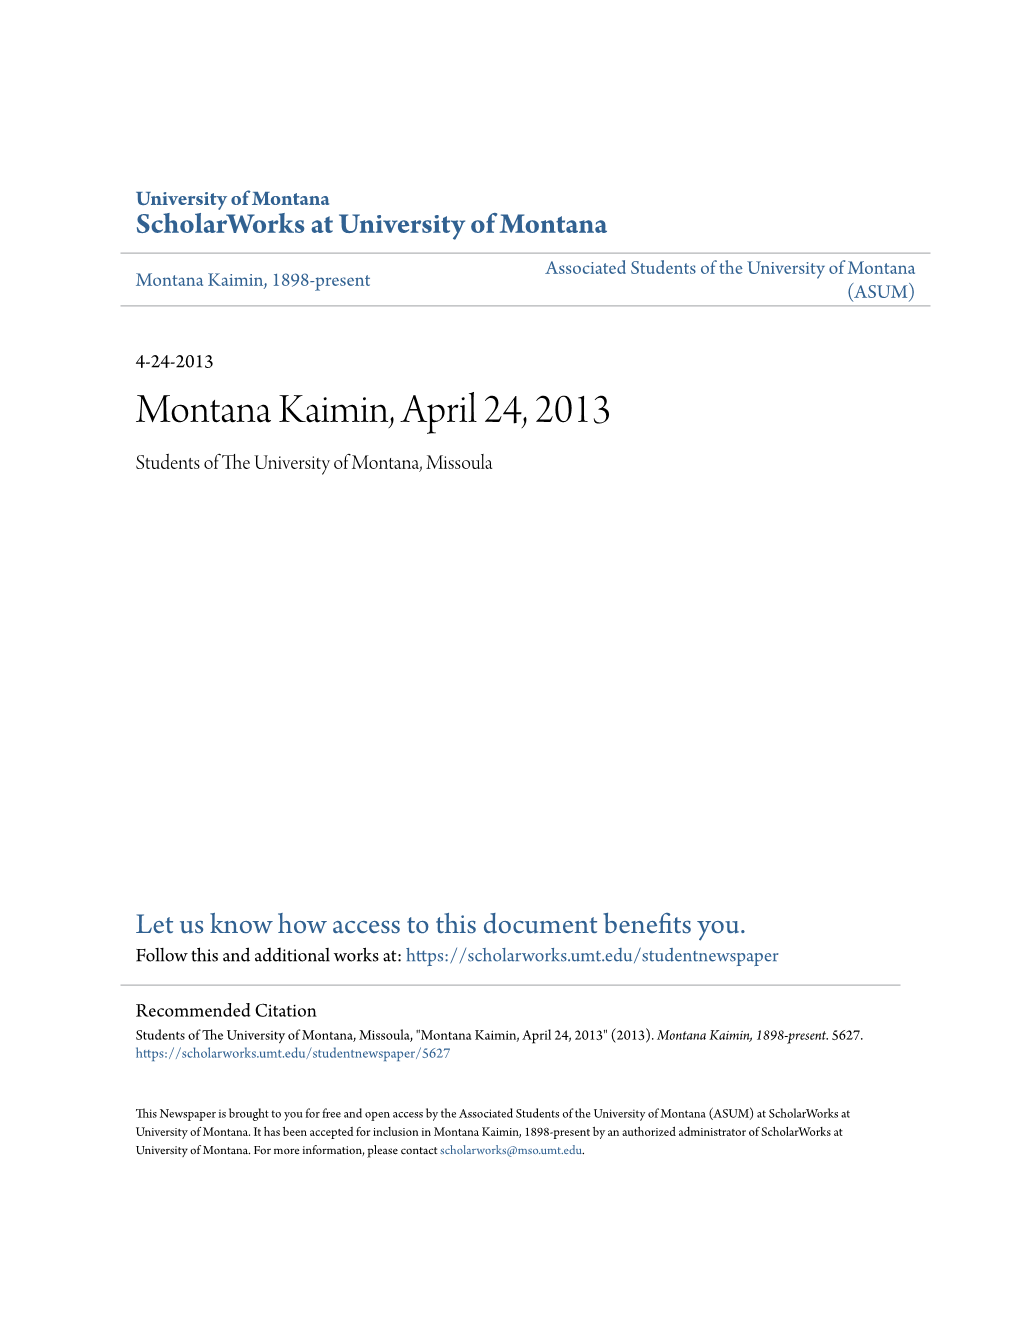 Montana Kaimin, April 24, 2013 Students of the Niu Versity of Montana, Missoula